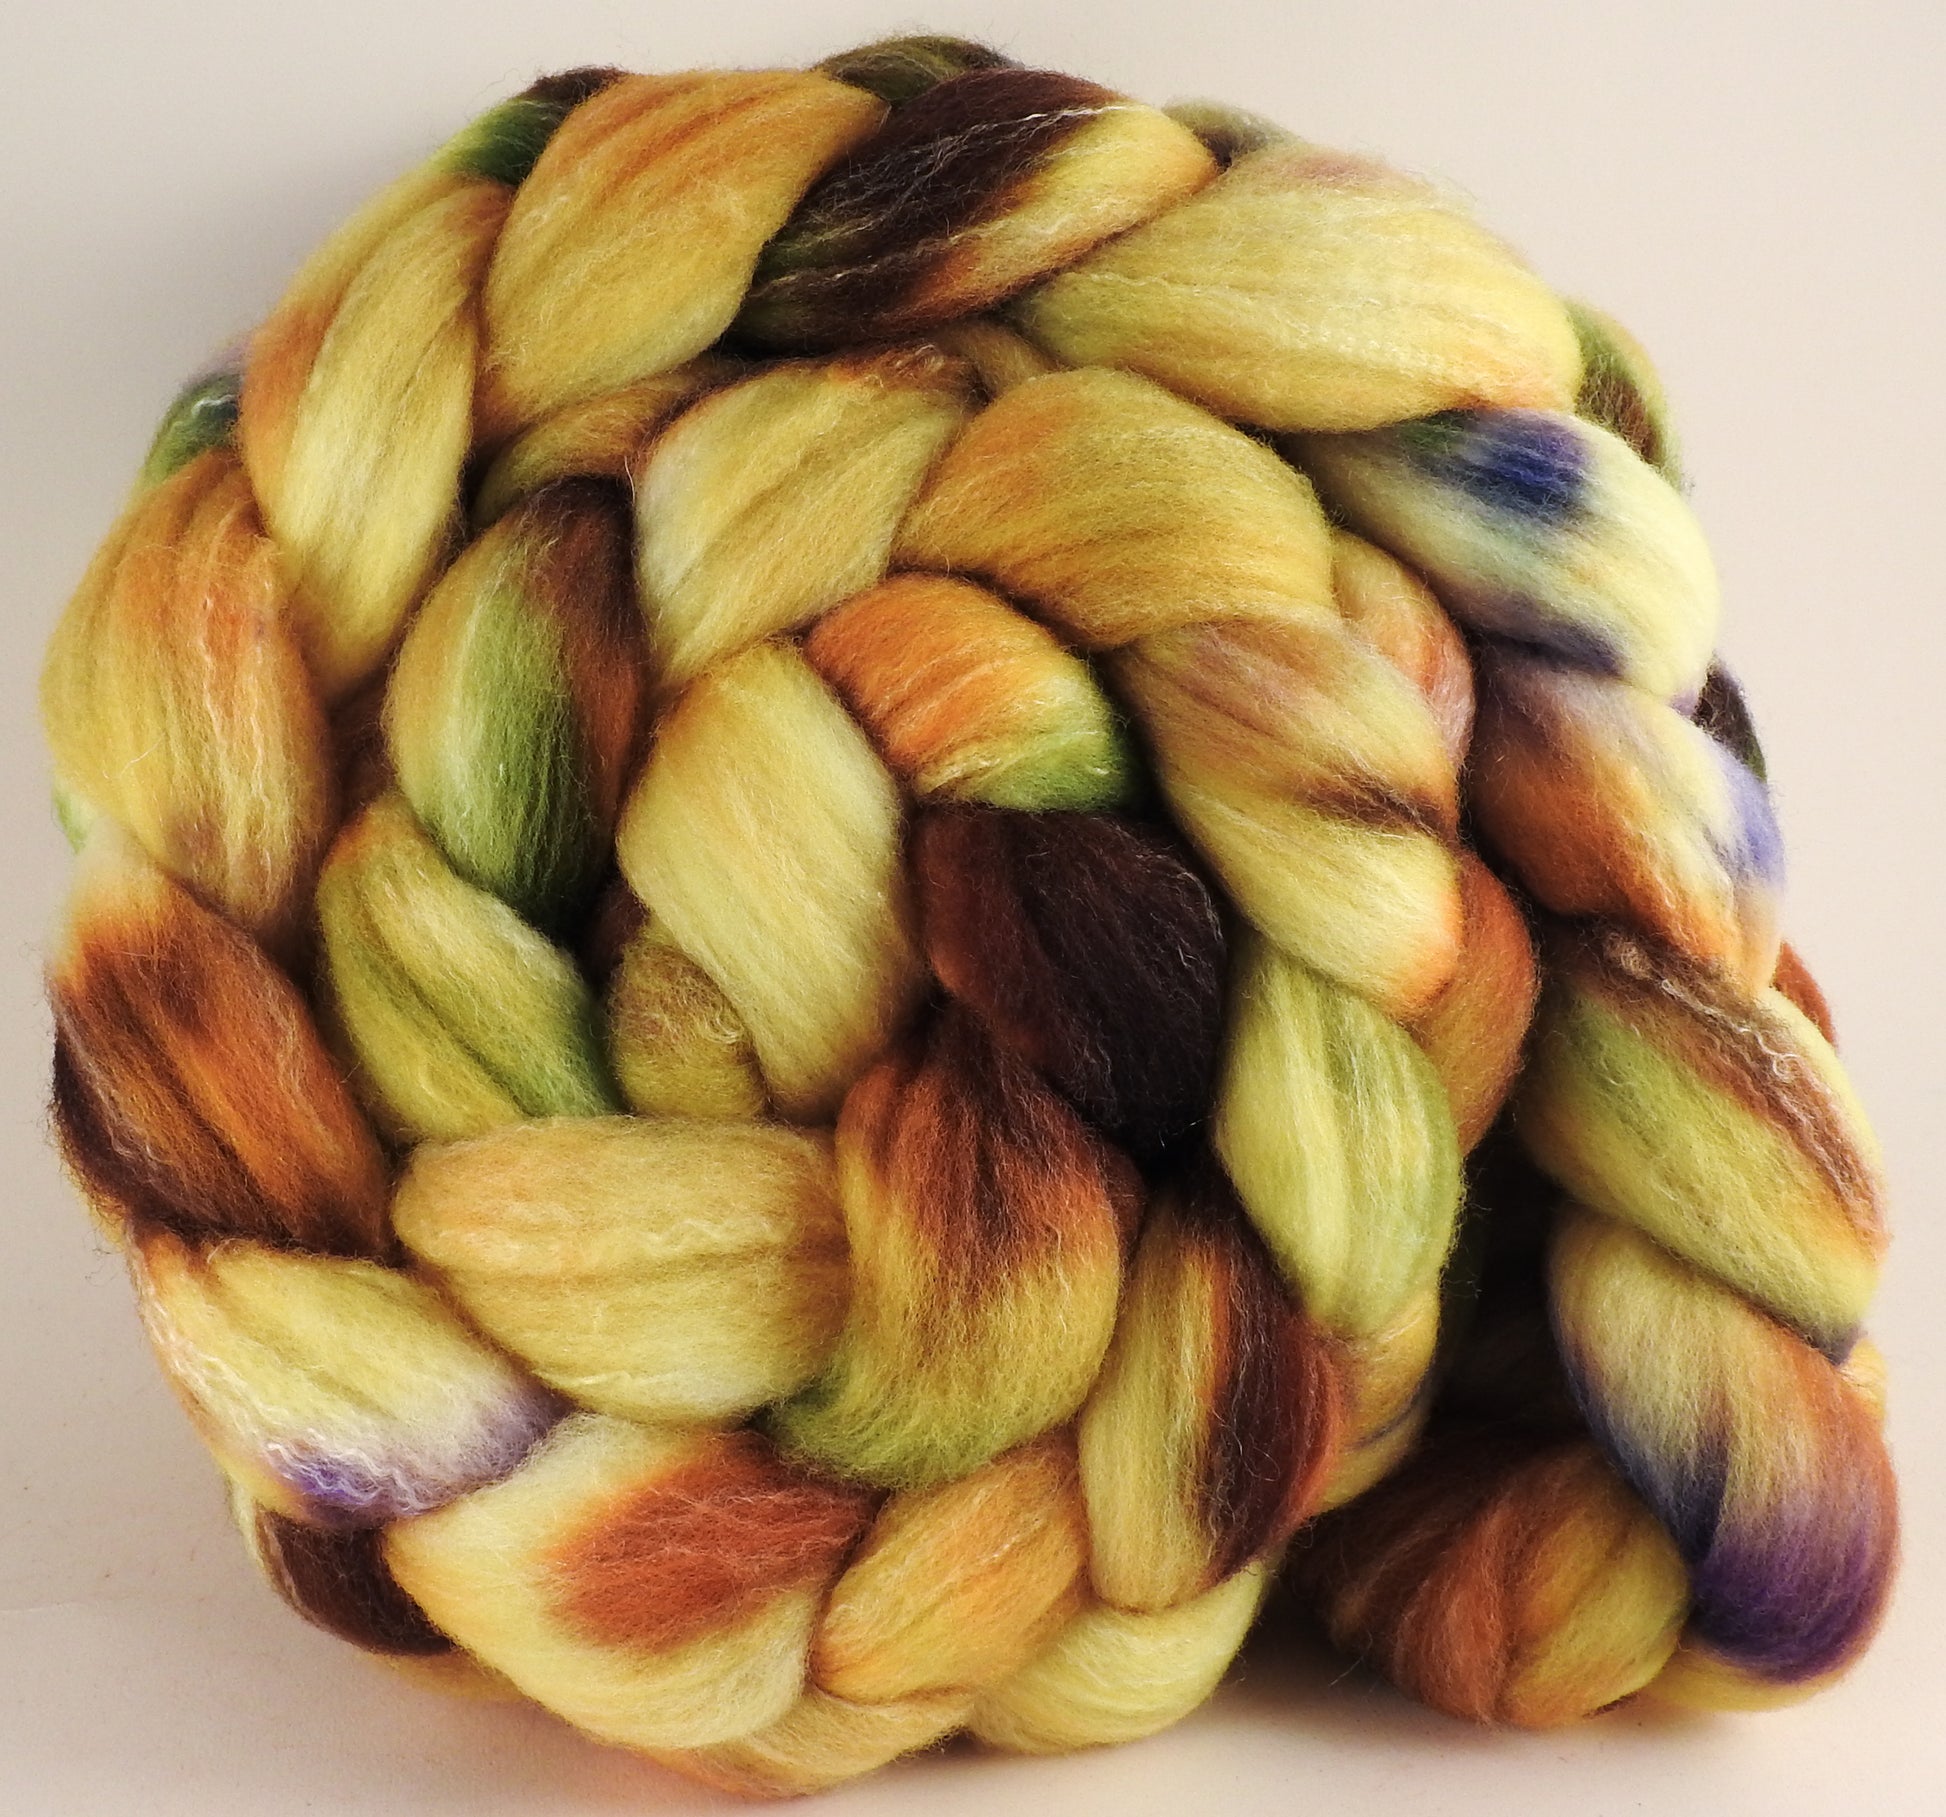 Hand dyed top for spinning -Field of Sunflowers - Targhee/silk/ bamboo ( 80/10/10) - Inglenook Fibers